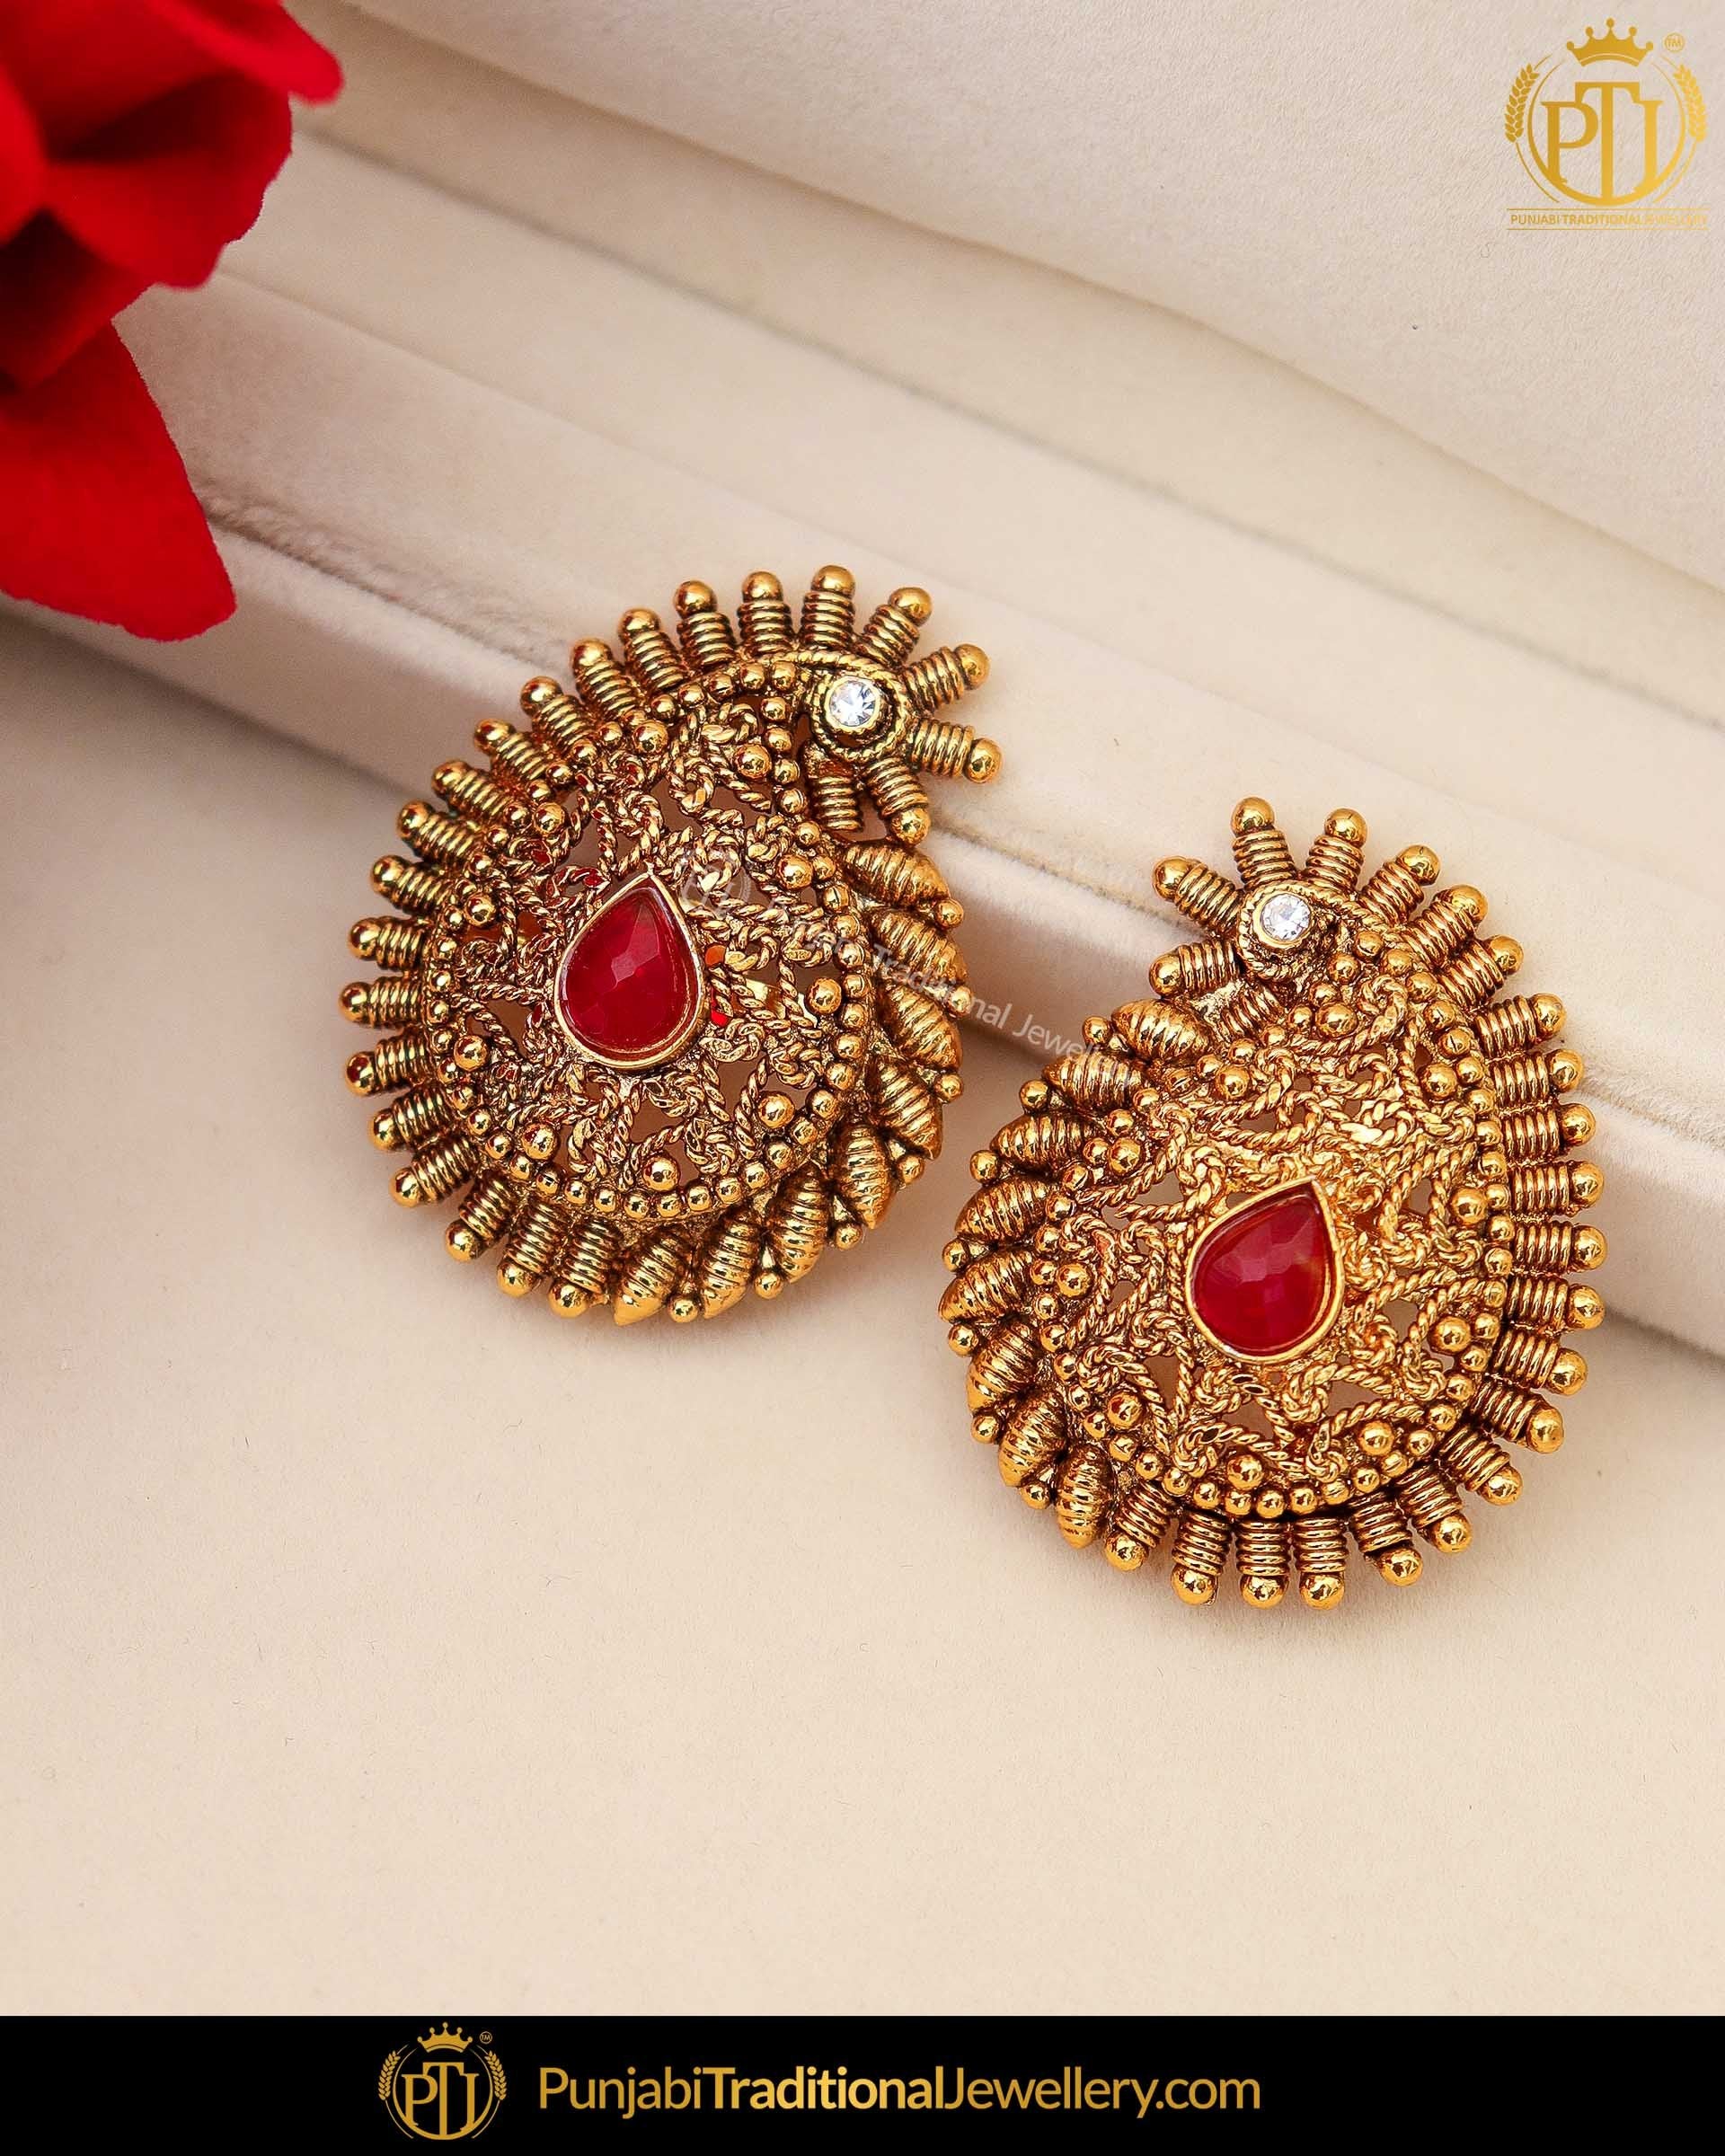 Vintage Antique Design 22k Yellow Gold Stud Earrings Jewelry, 22kt Gold  Earrings Handmade Jewelry, Women Gold Earrings, Made in India, - Etsy Sweden